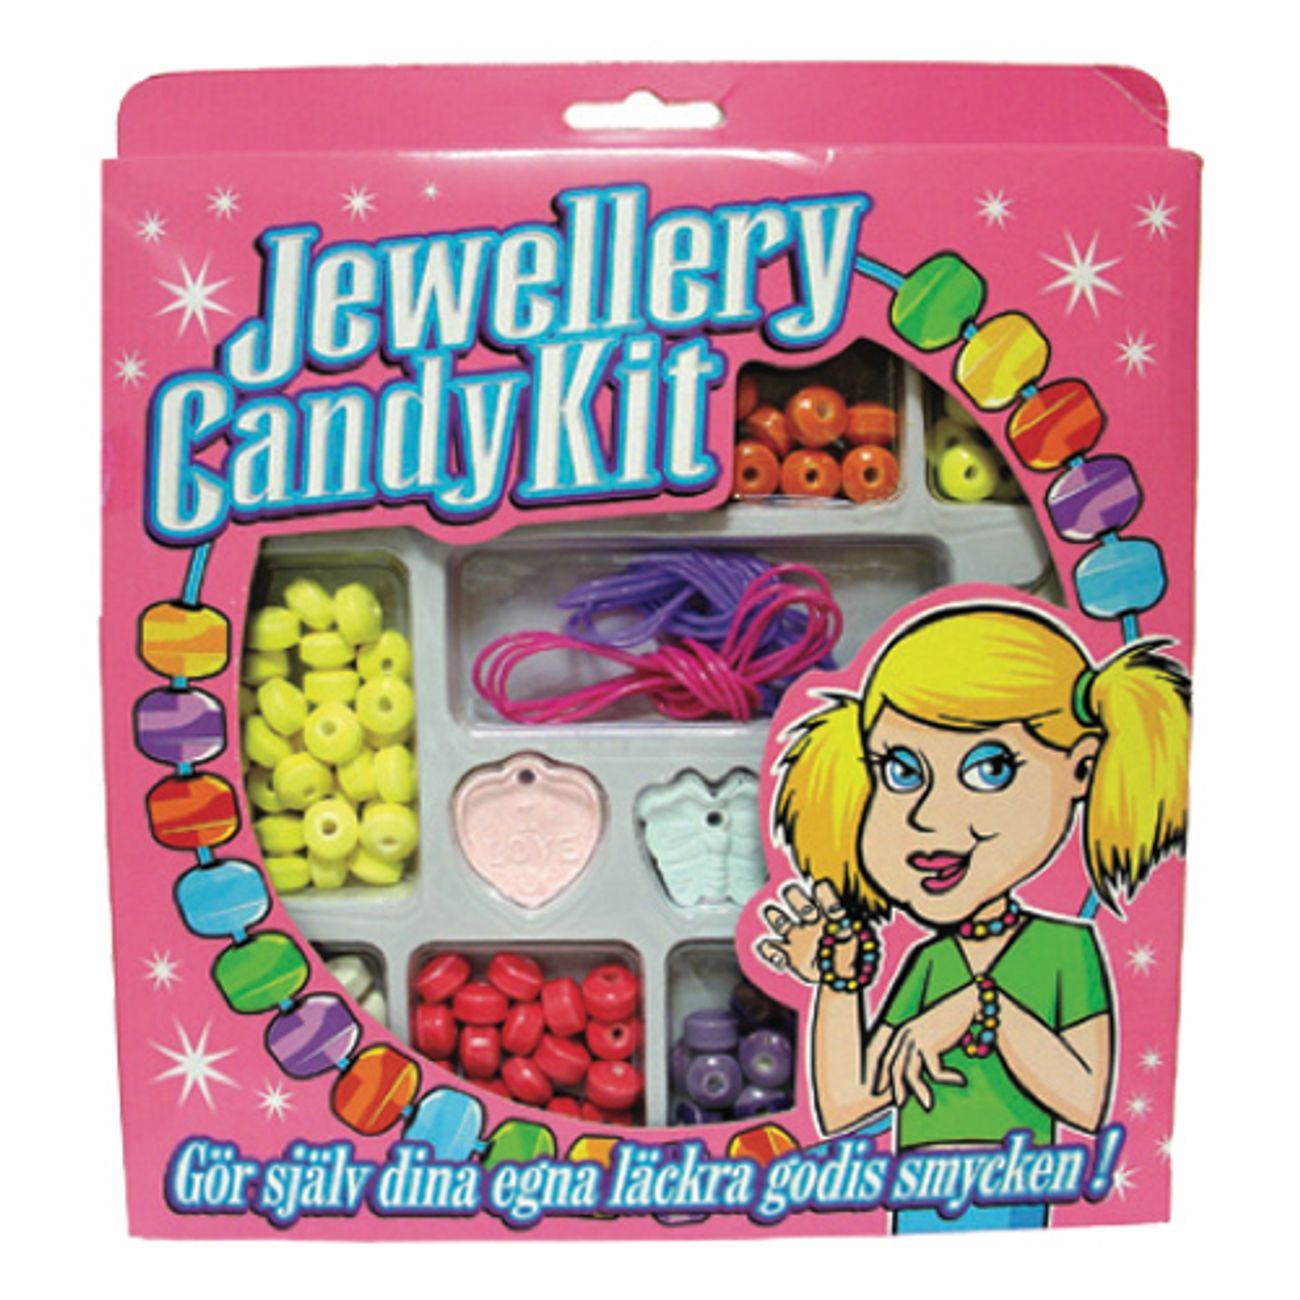 jewellery-candy-kit-1